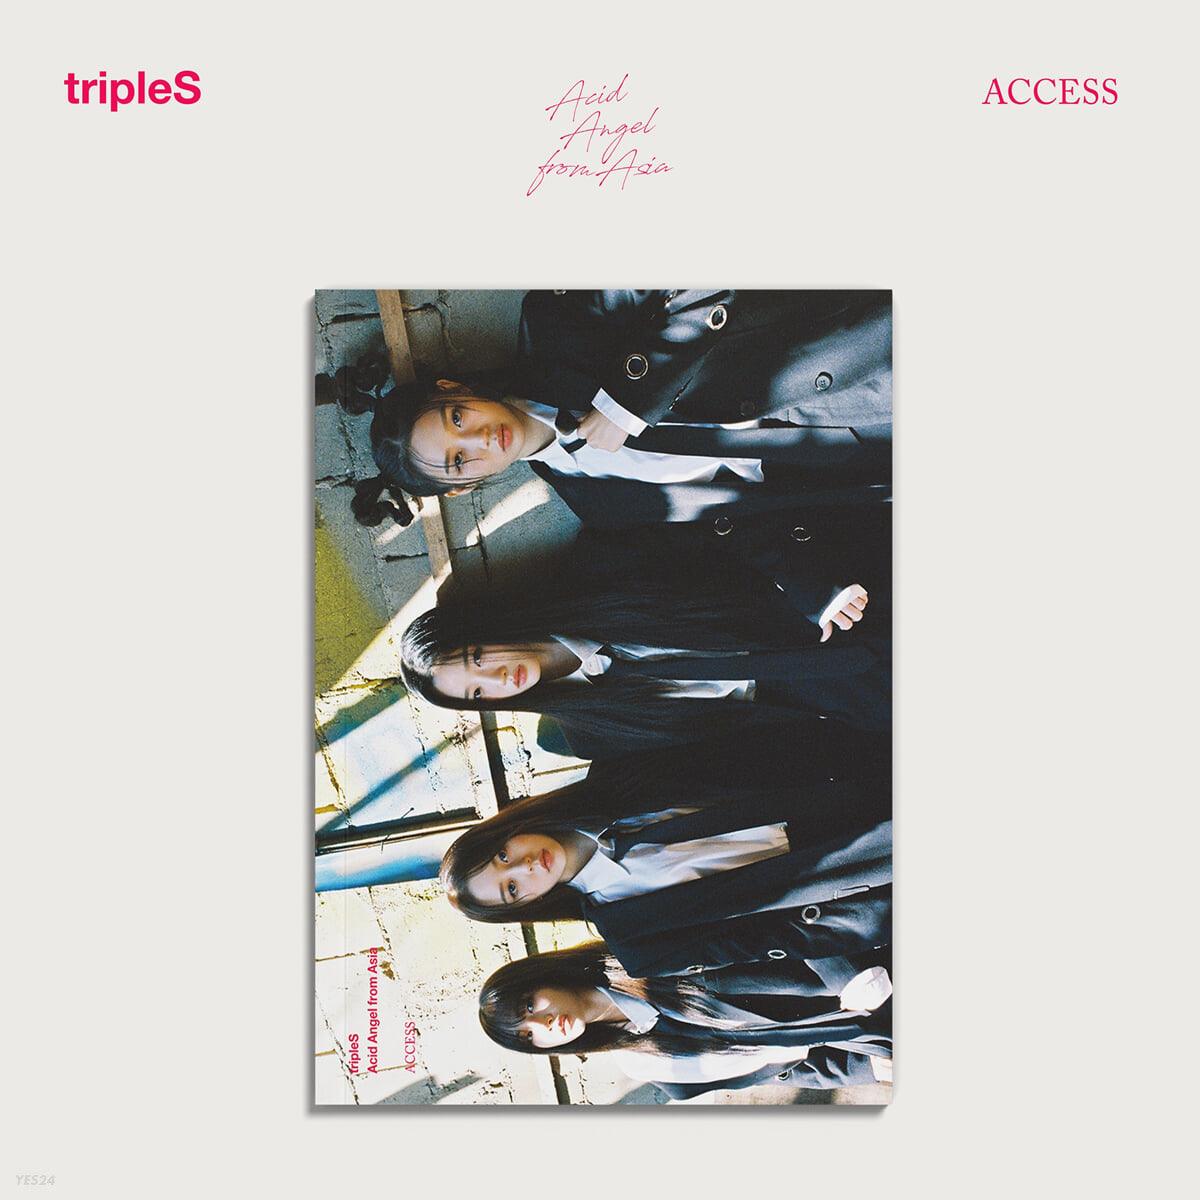 TripleS - Acid Angel From Asia [ACCESS] (Random) - KKANG